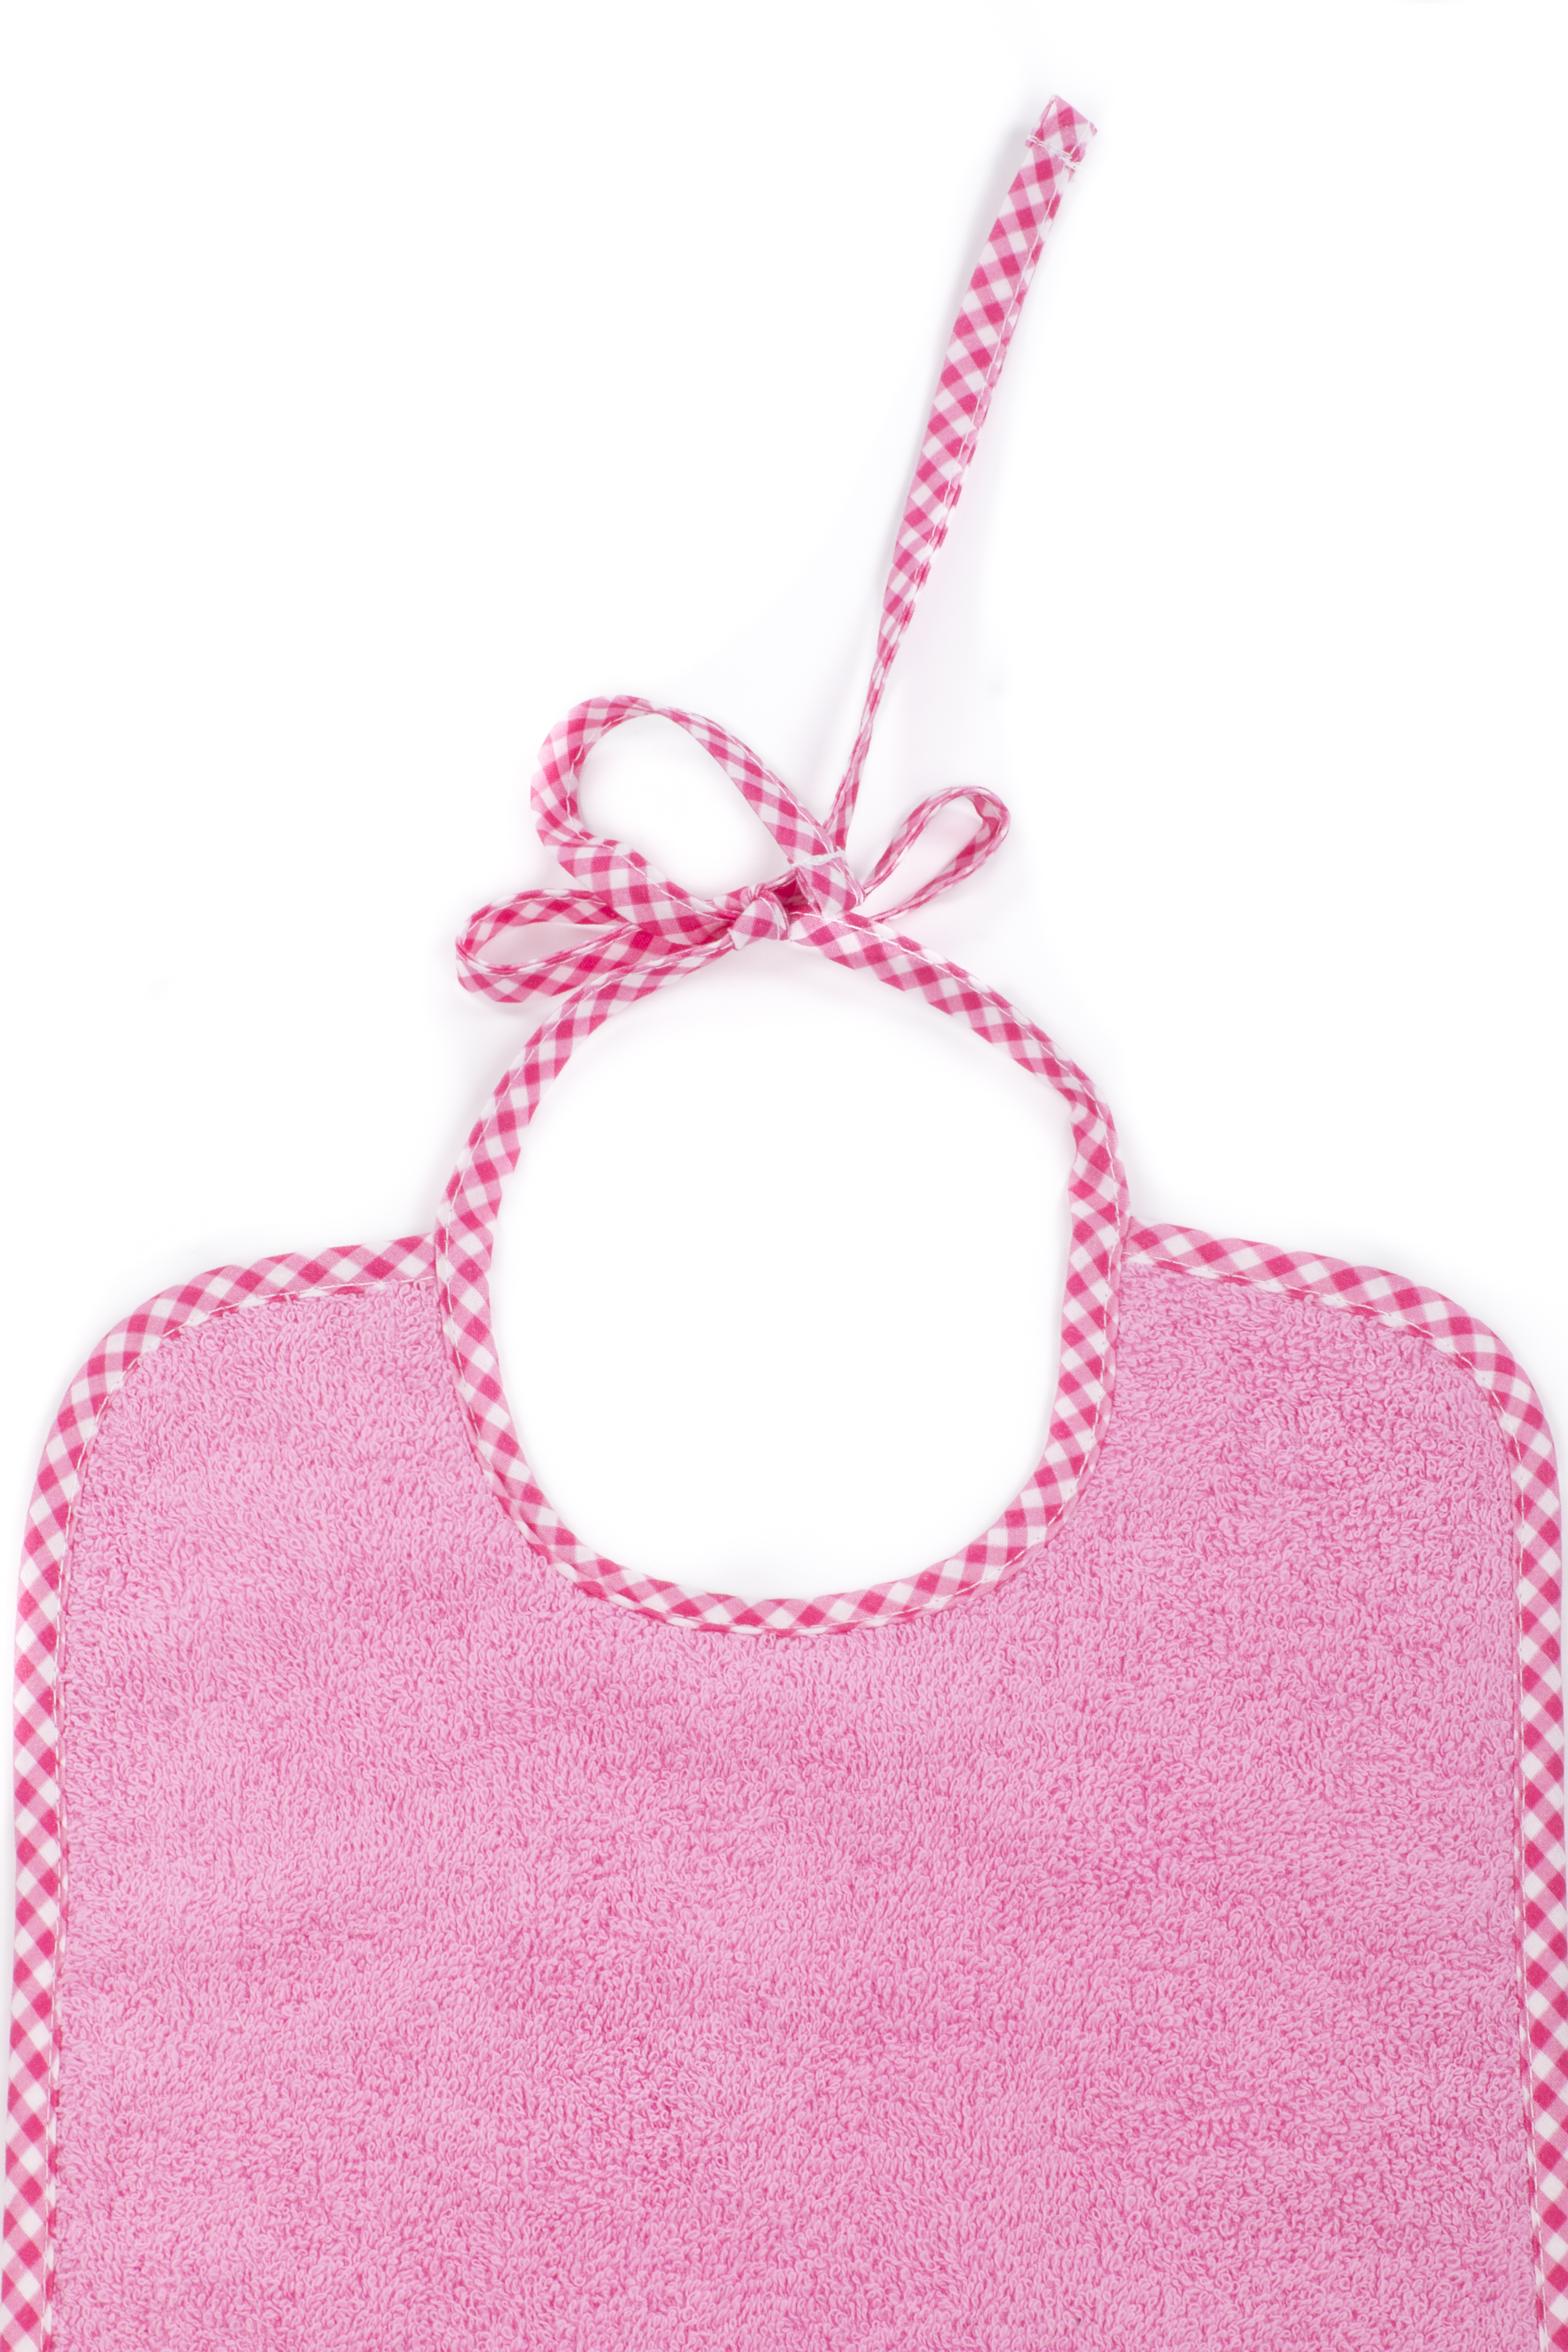 Bib with straps Girl, uni pink, 35x27 cm 